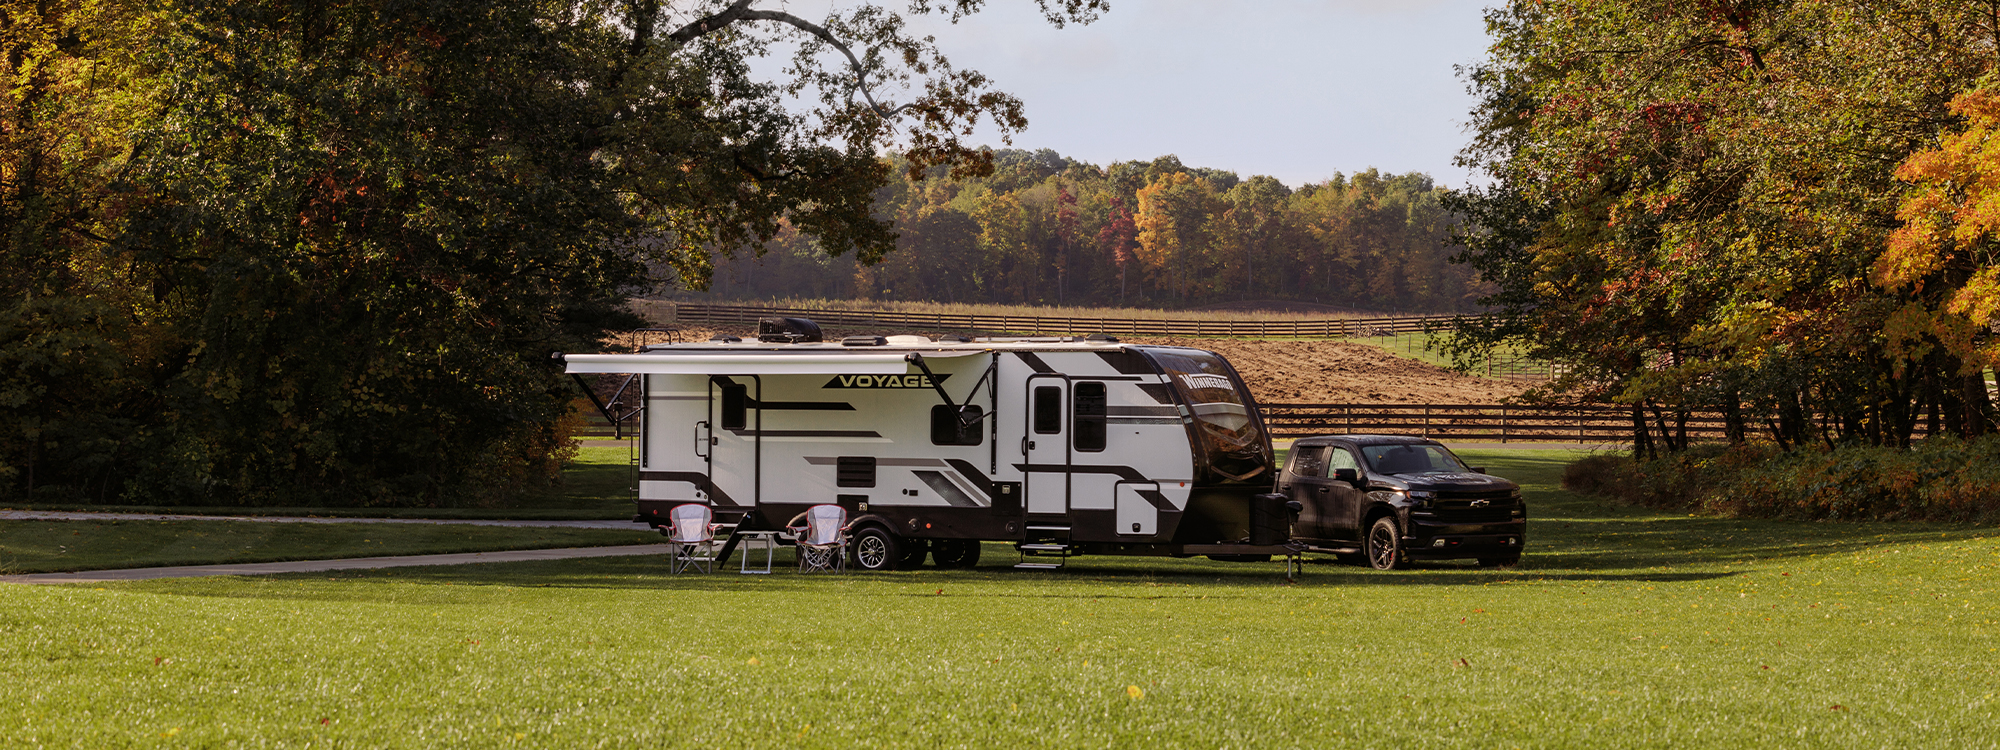 voyage travel trailer parked in an open field